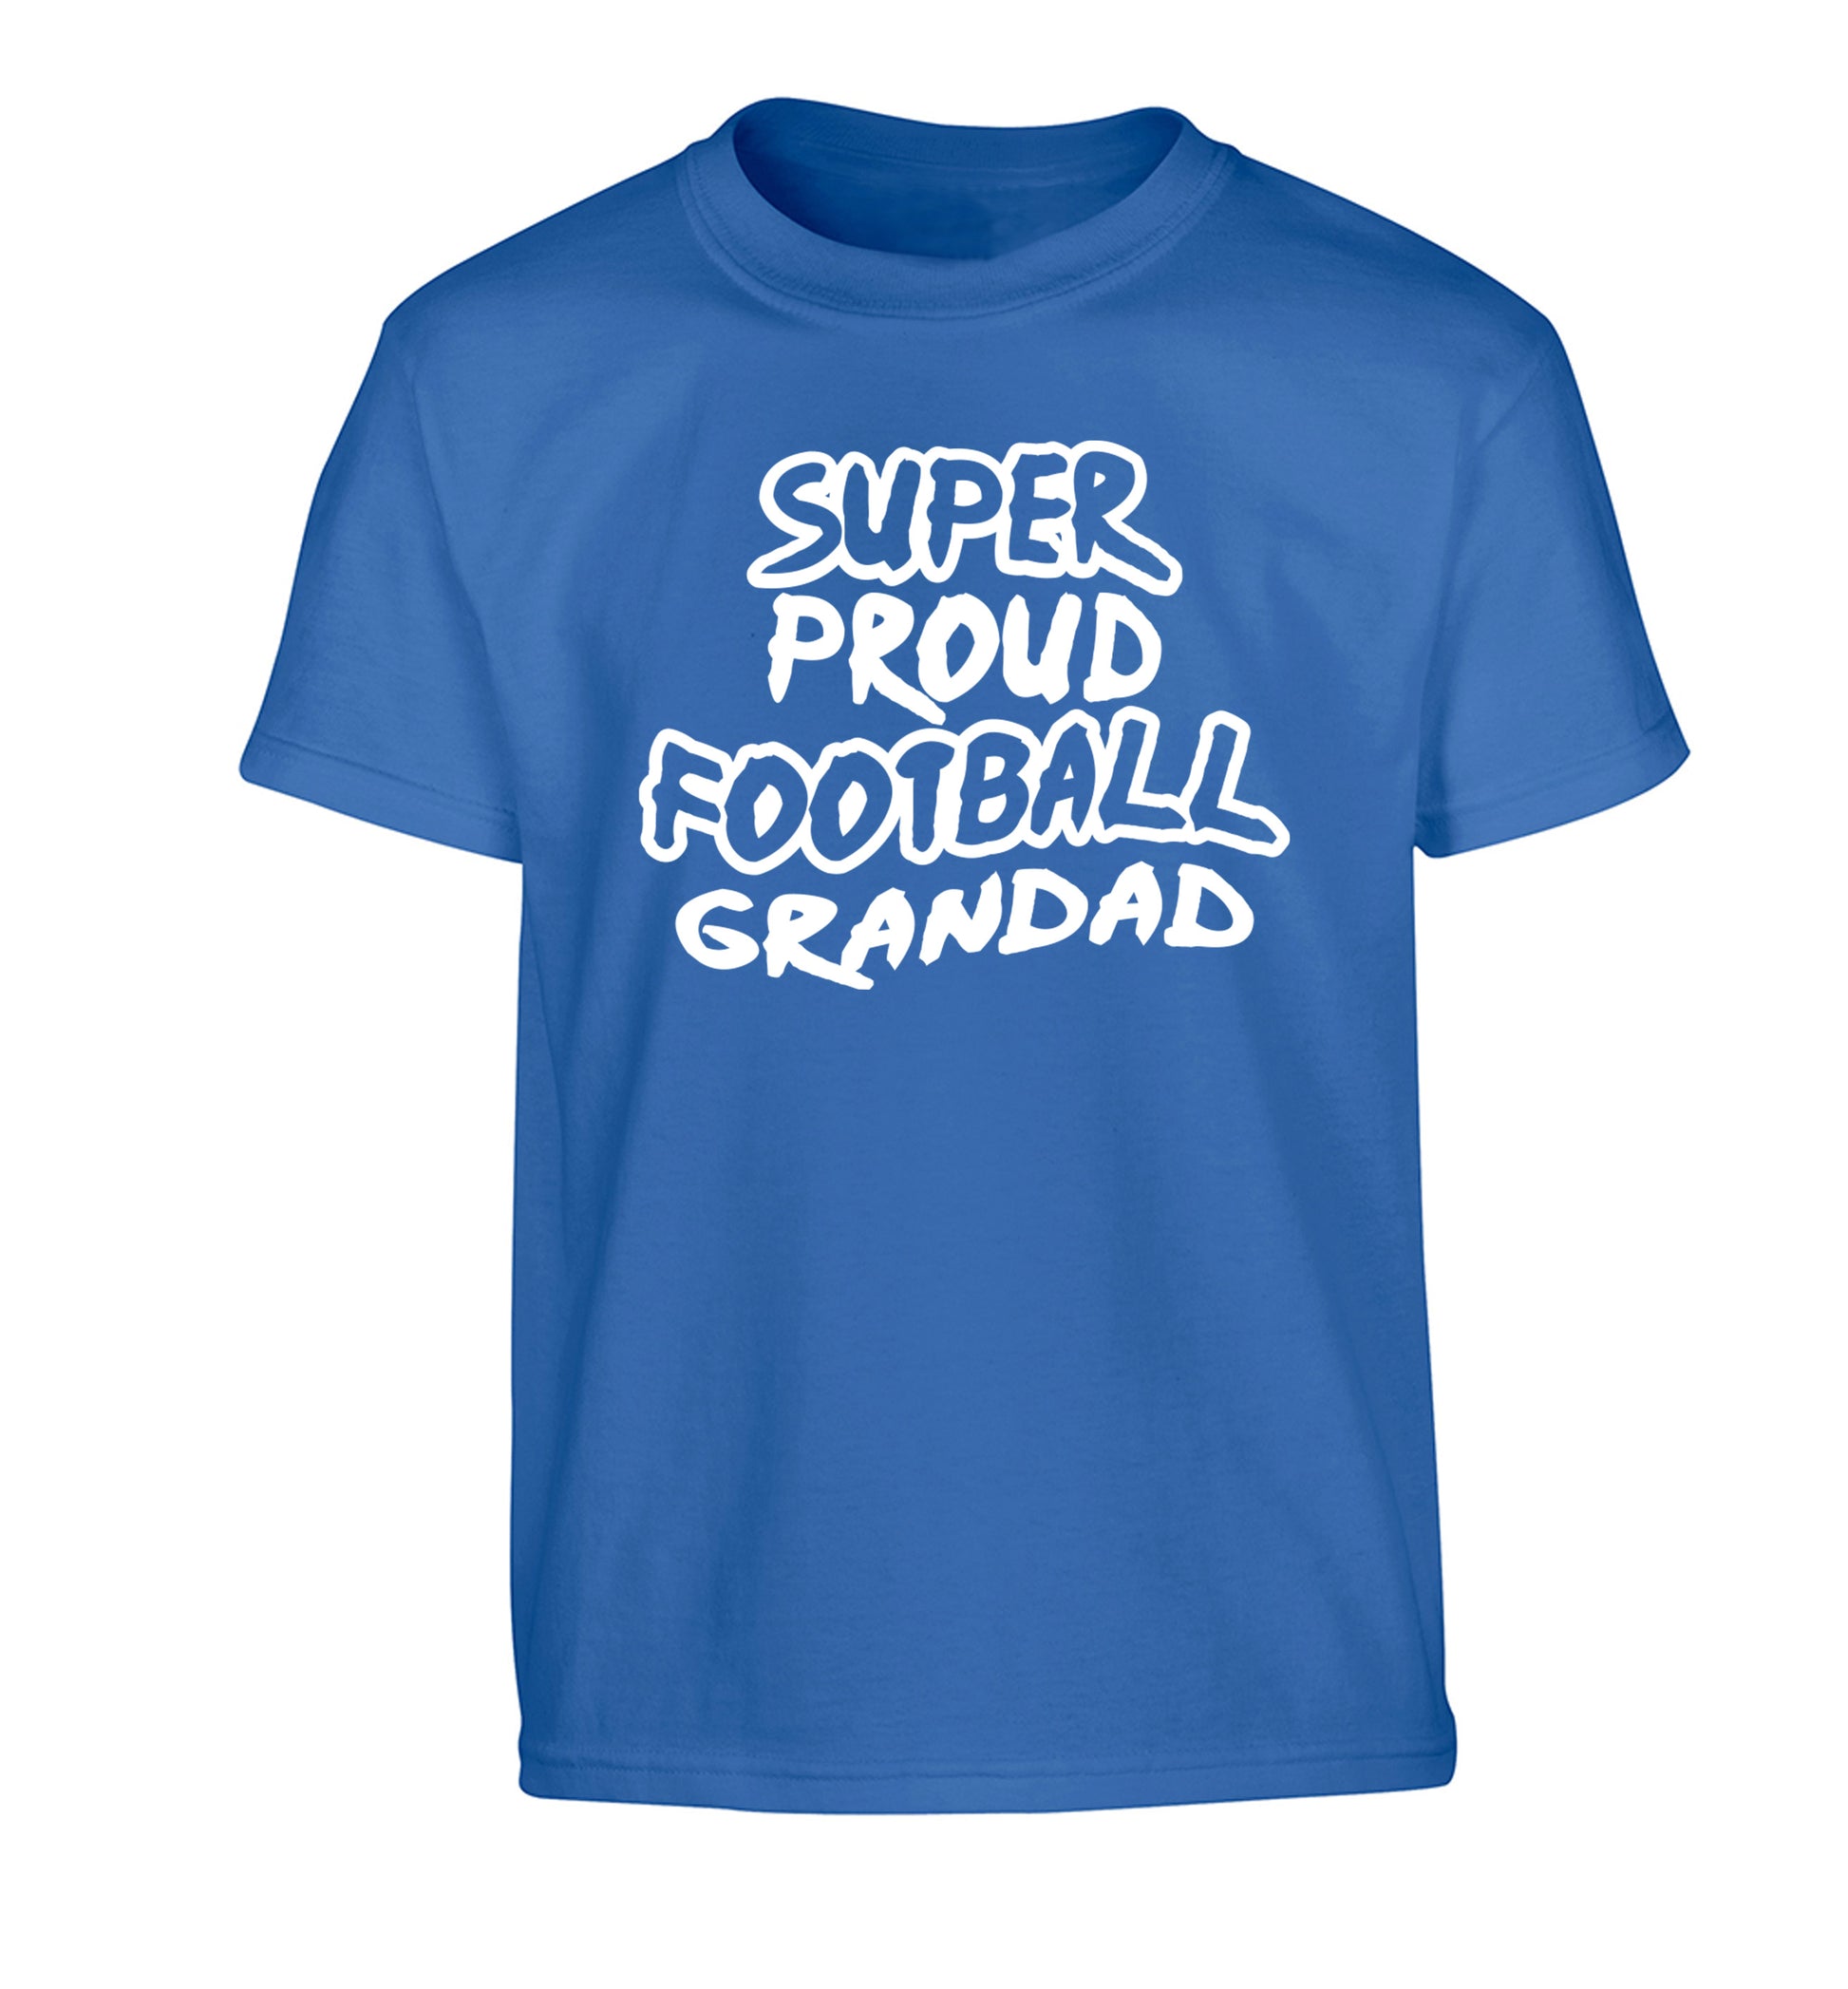 Super proud football grandad Children's blue Tshirt 12-14 Years